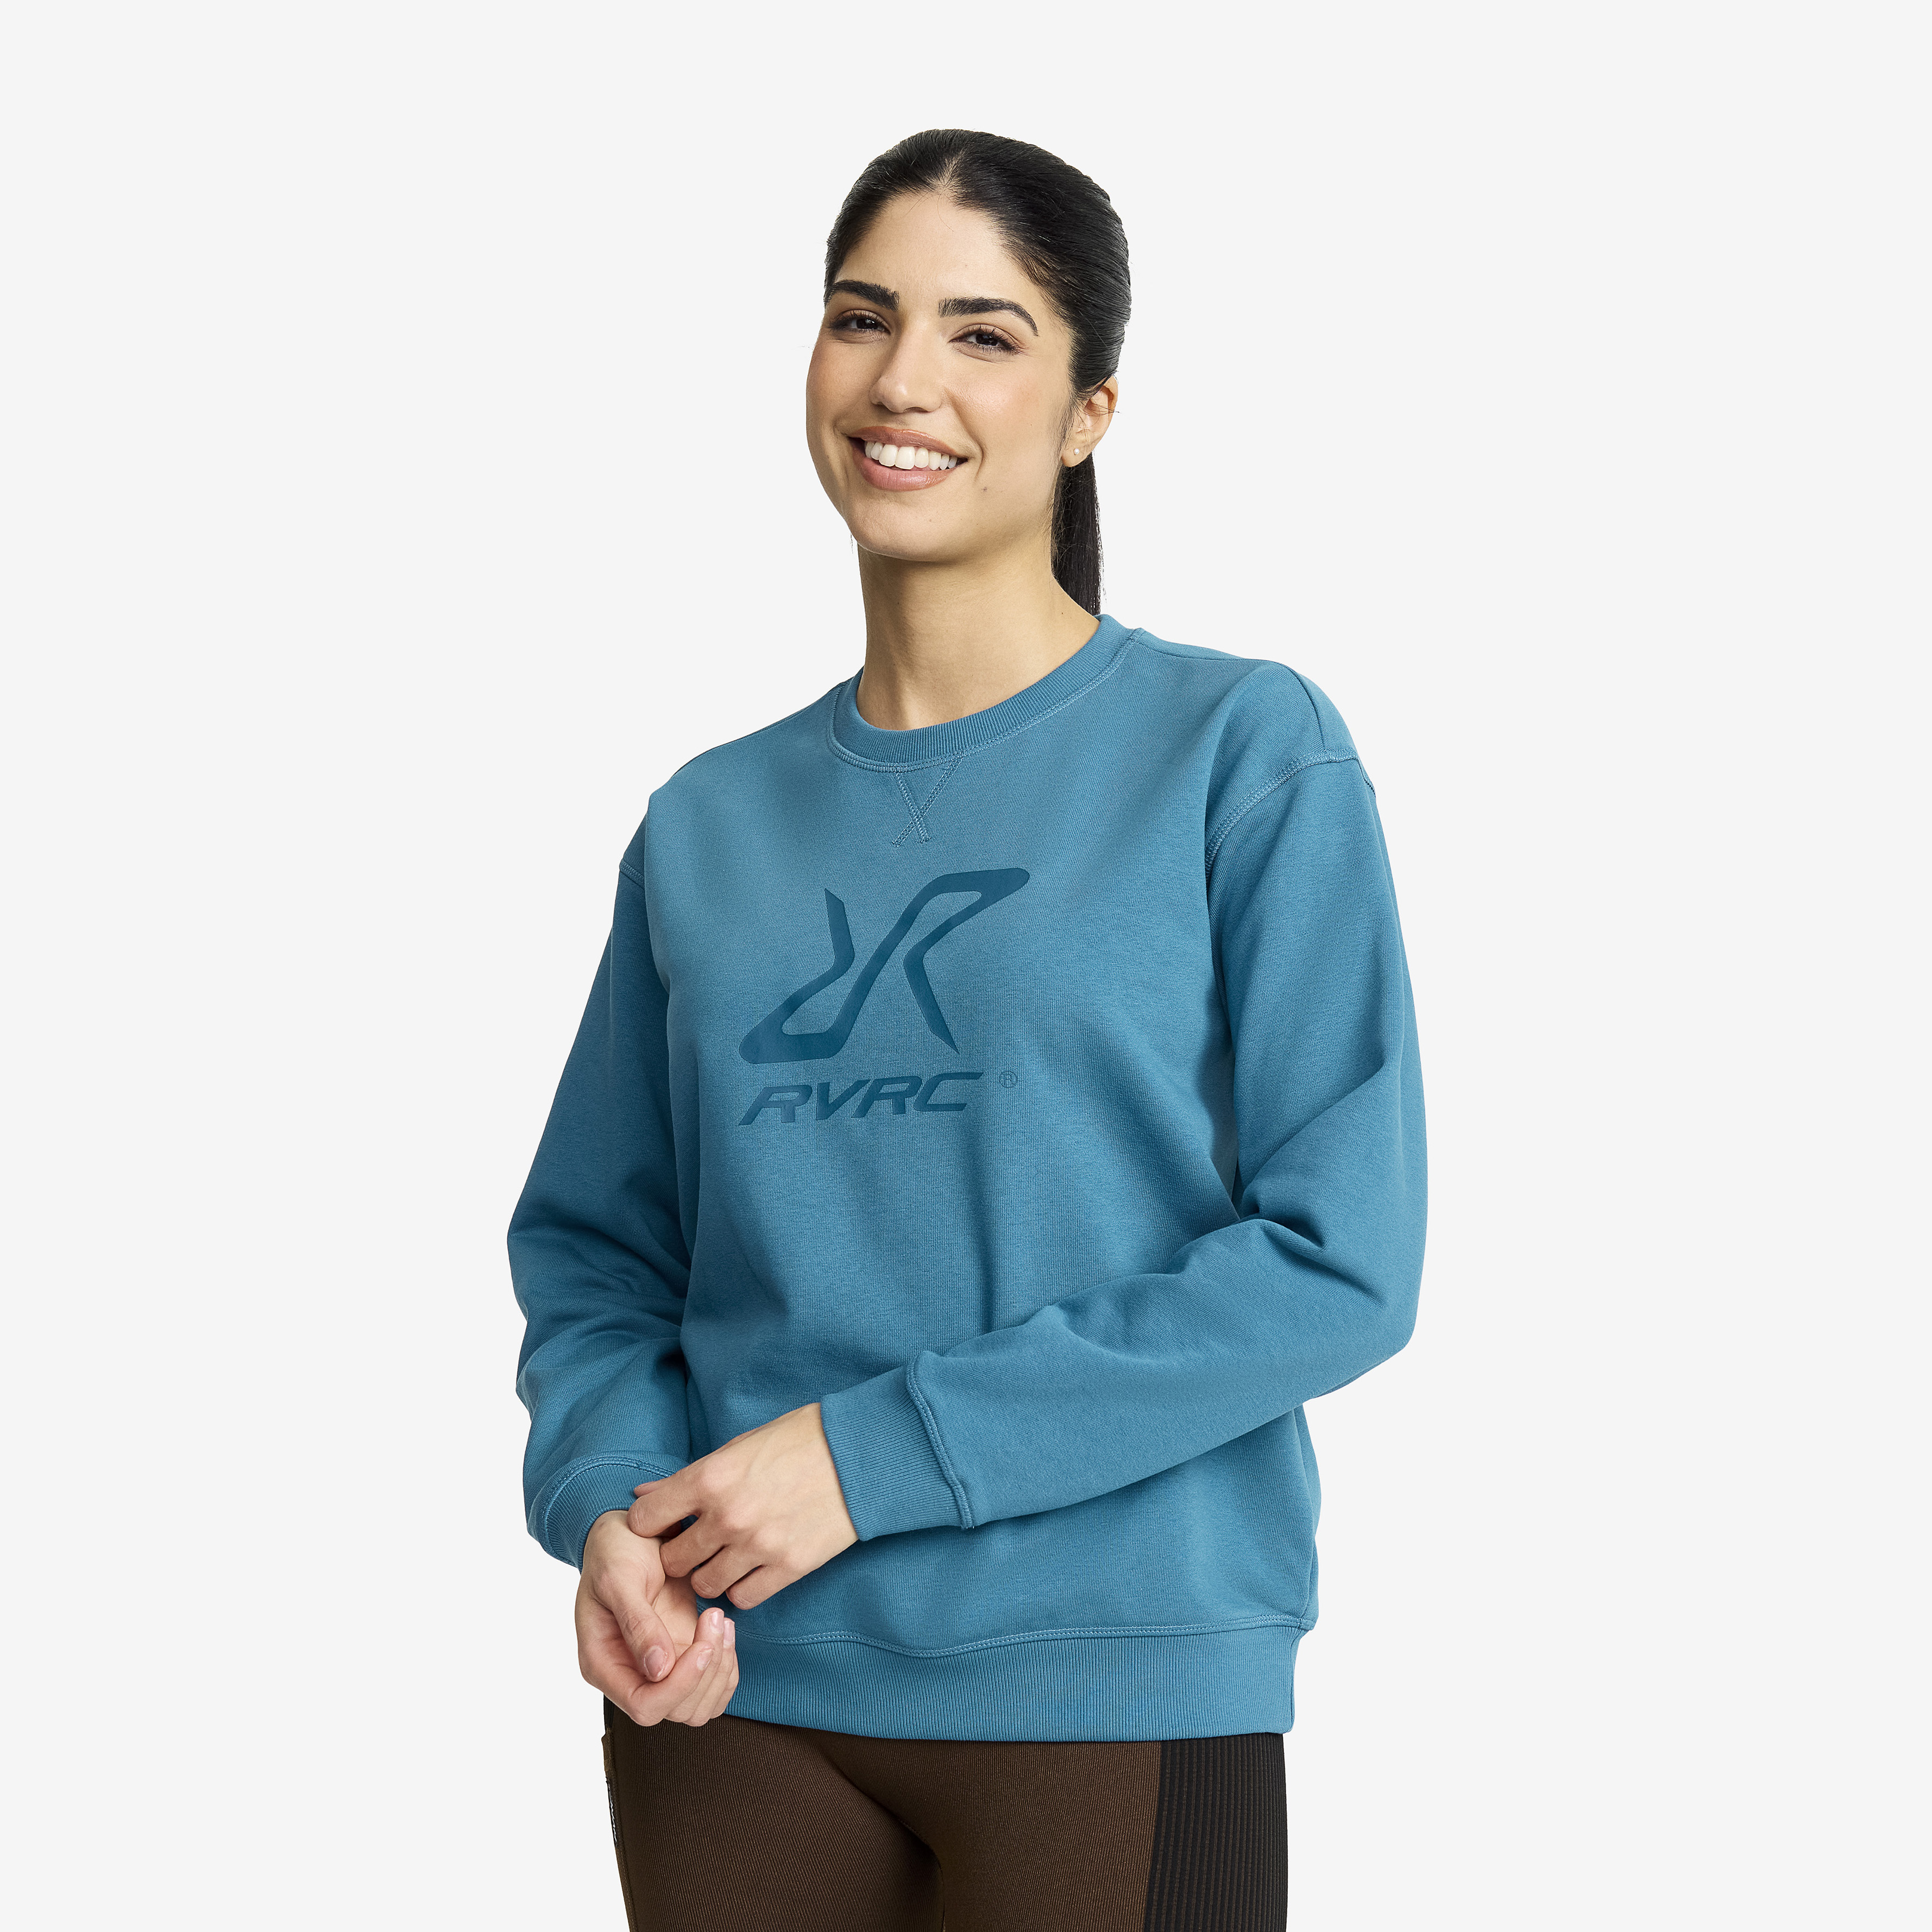 RVRC Sweatshirt Saxony Blue Dame